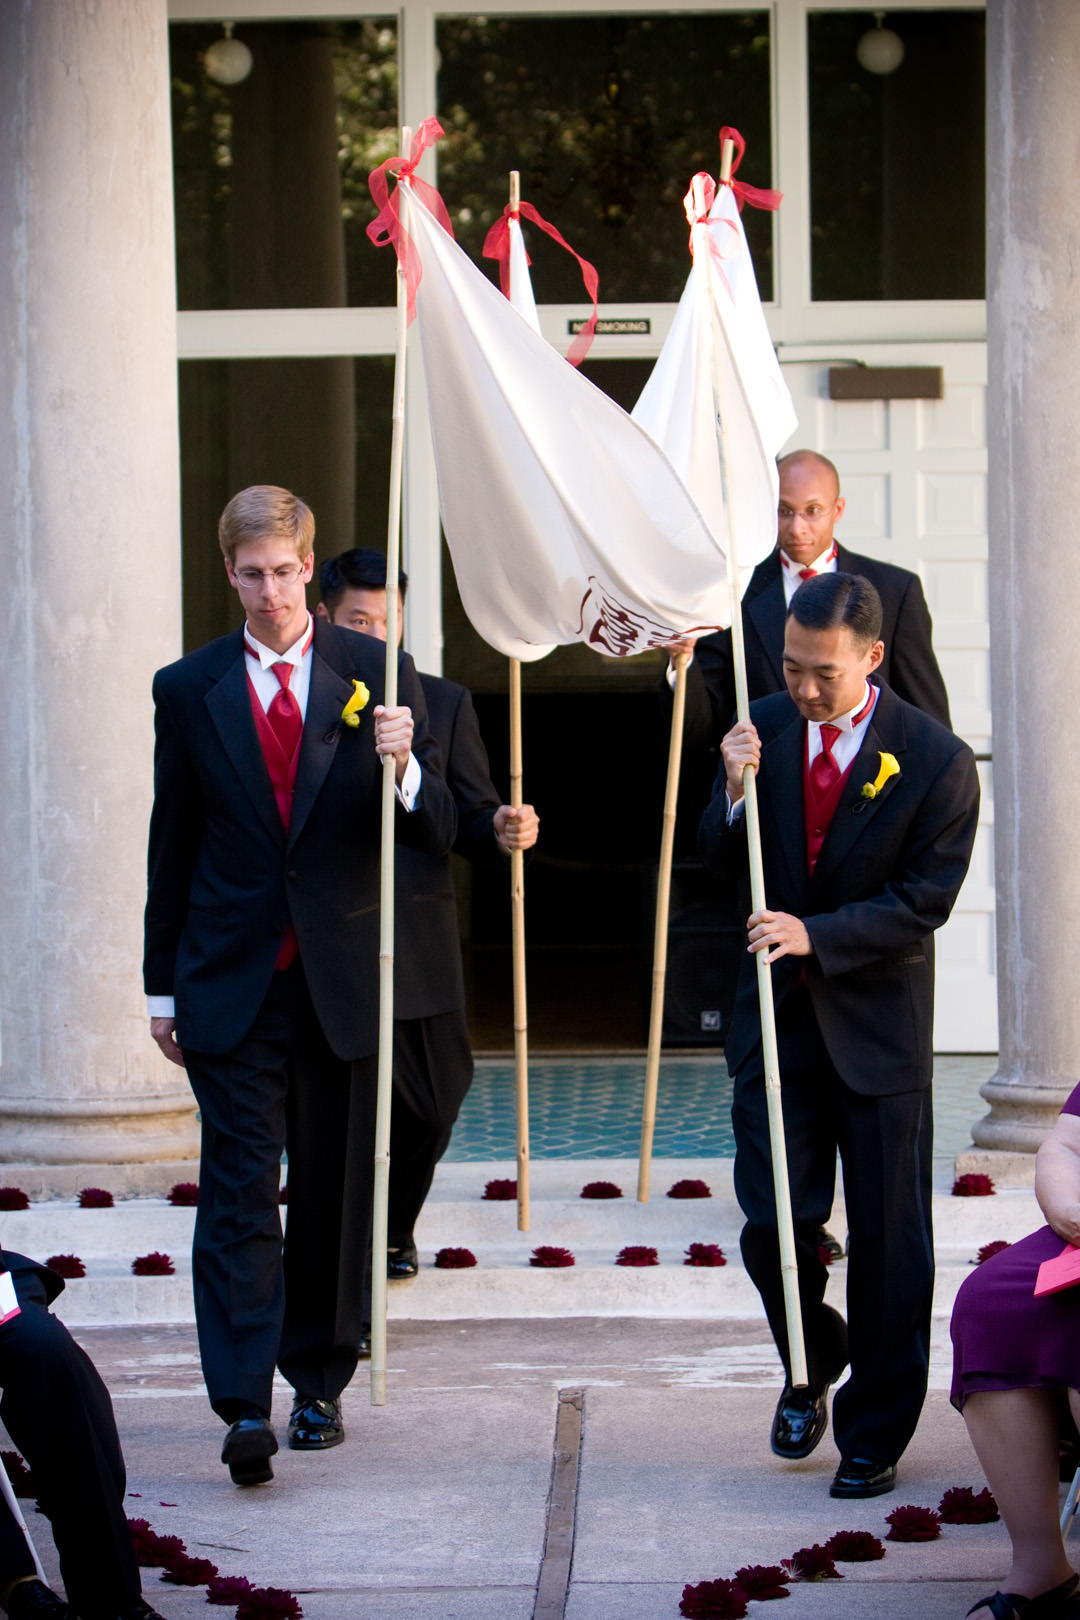 Groomsmen carry chuppah before wedding